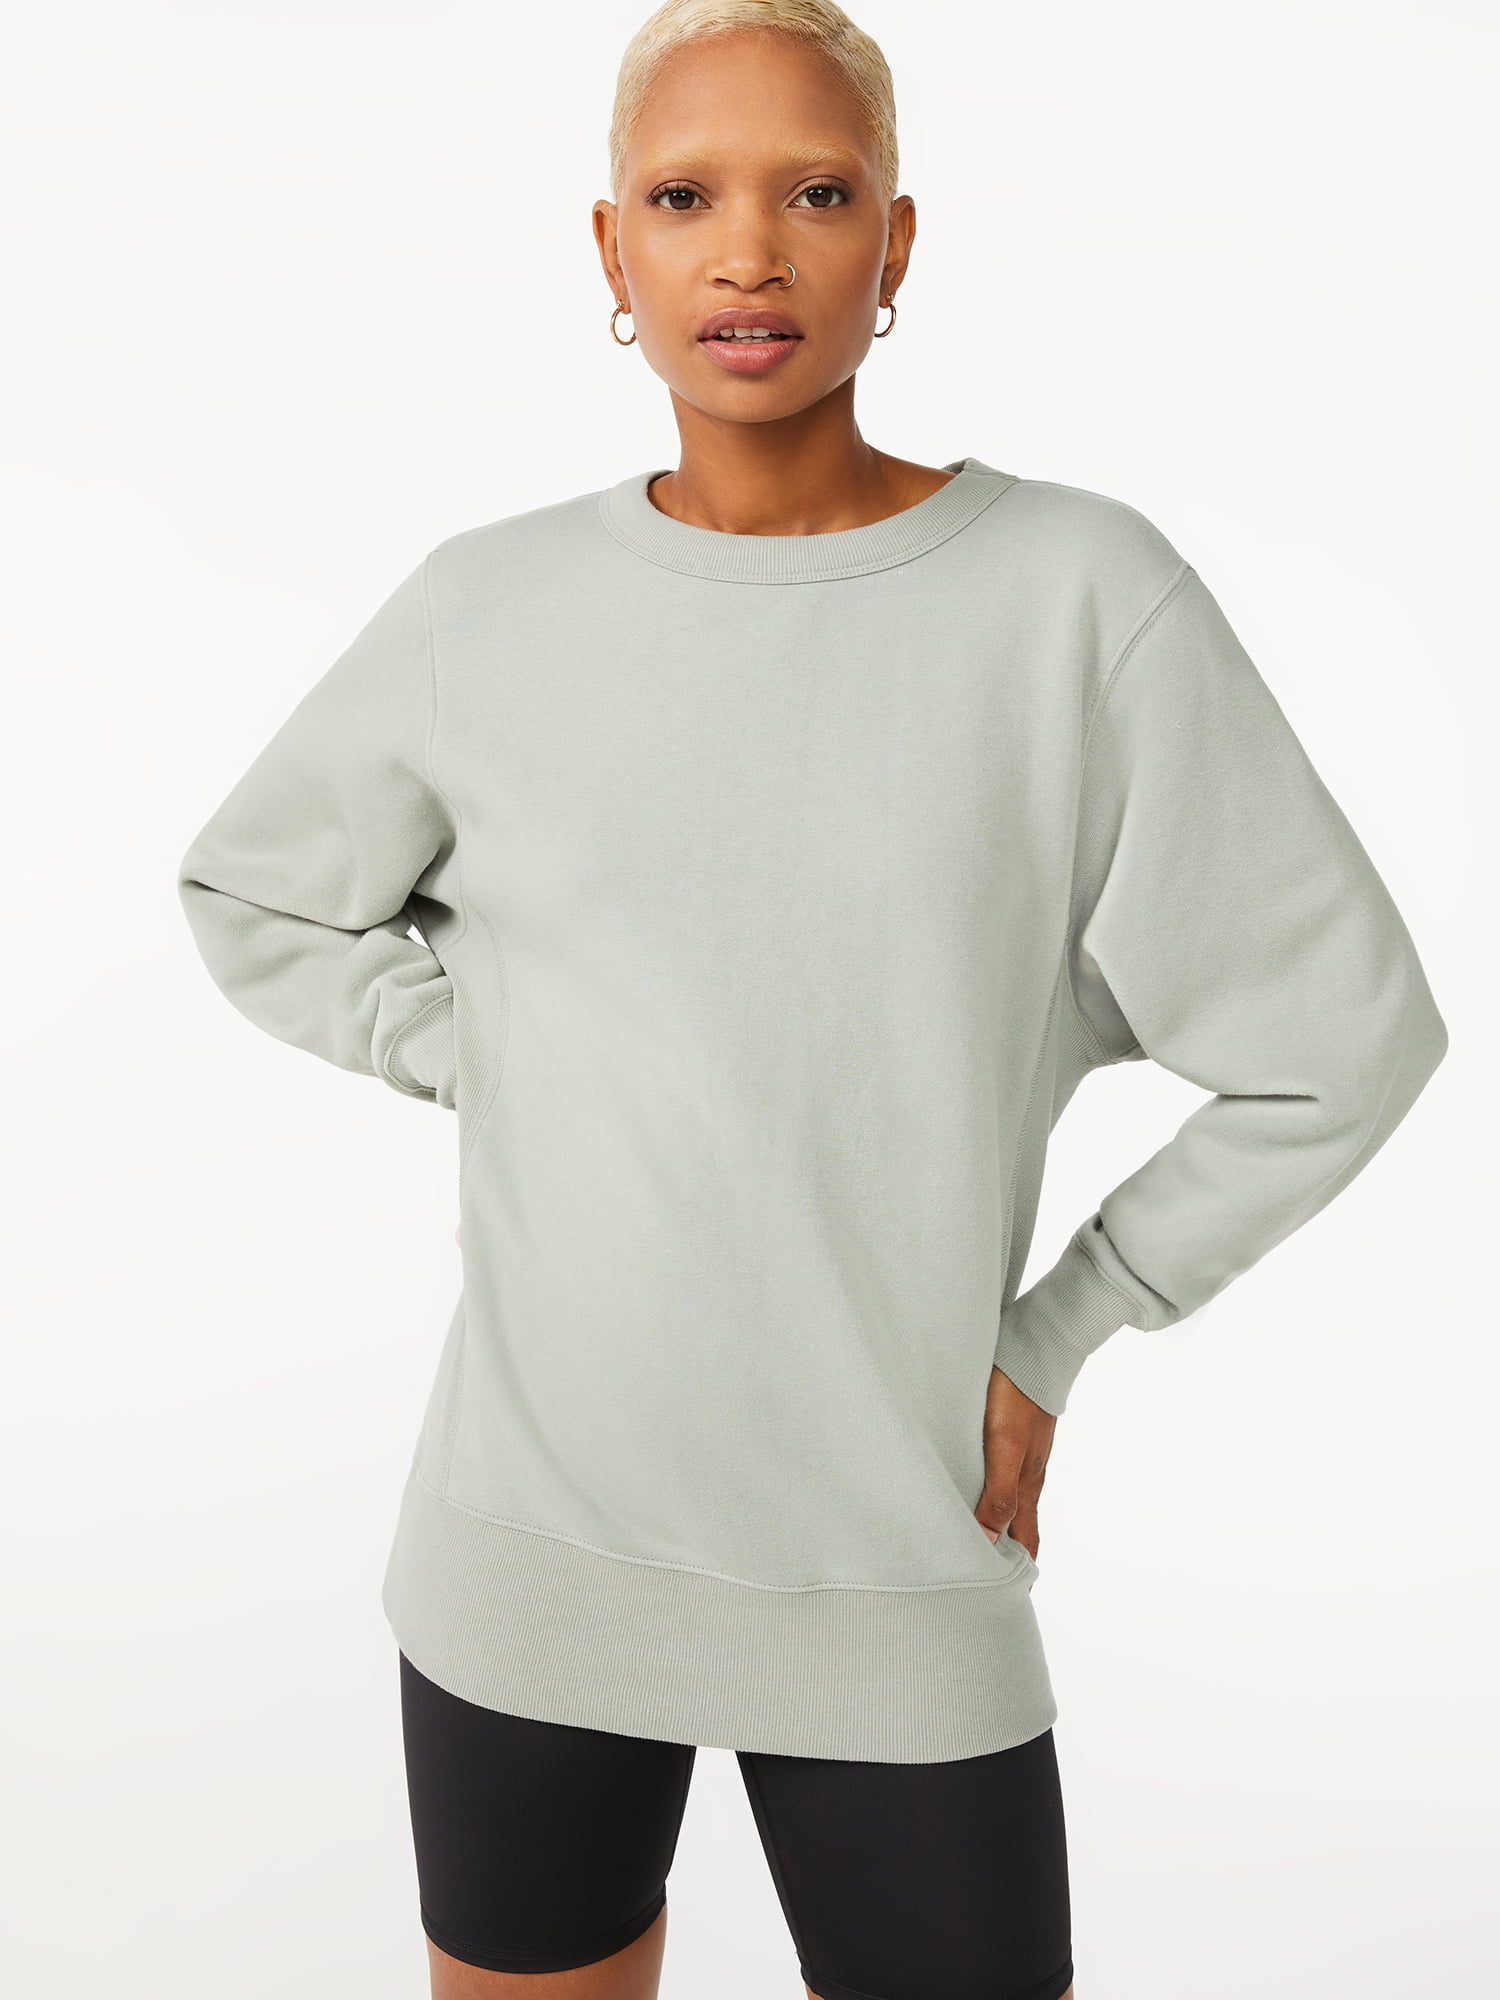 Free Assembly Women's Tunic Fleece Sweatshirt with Long Sleeves -  Walmart.com